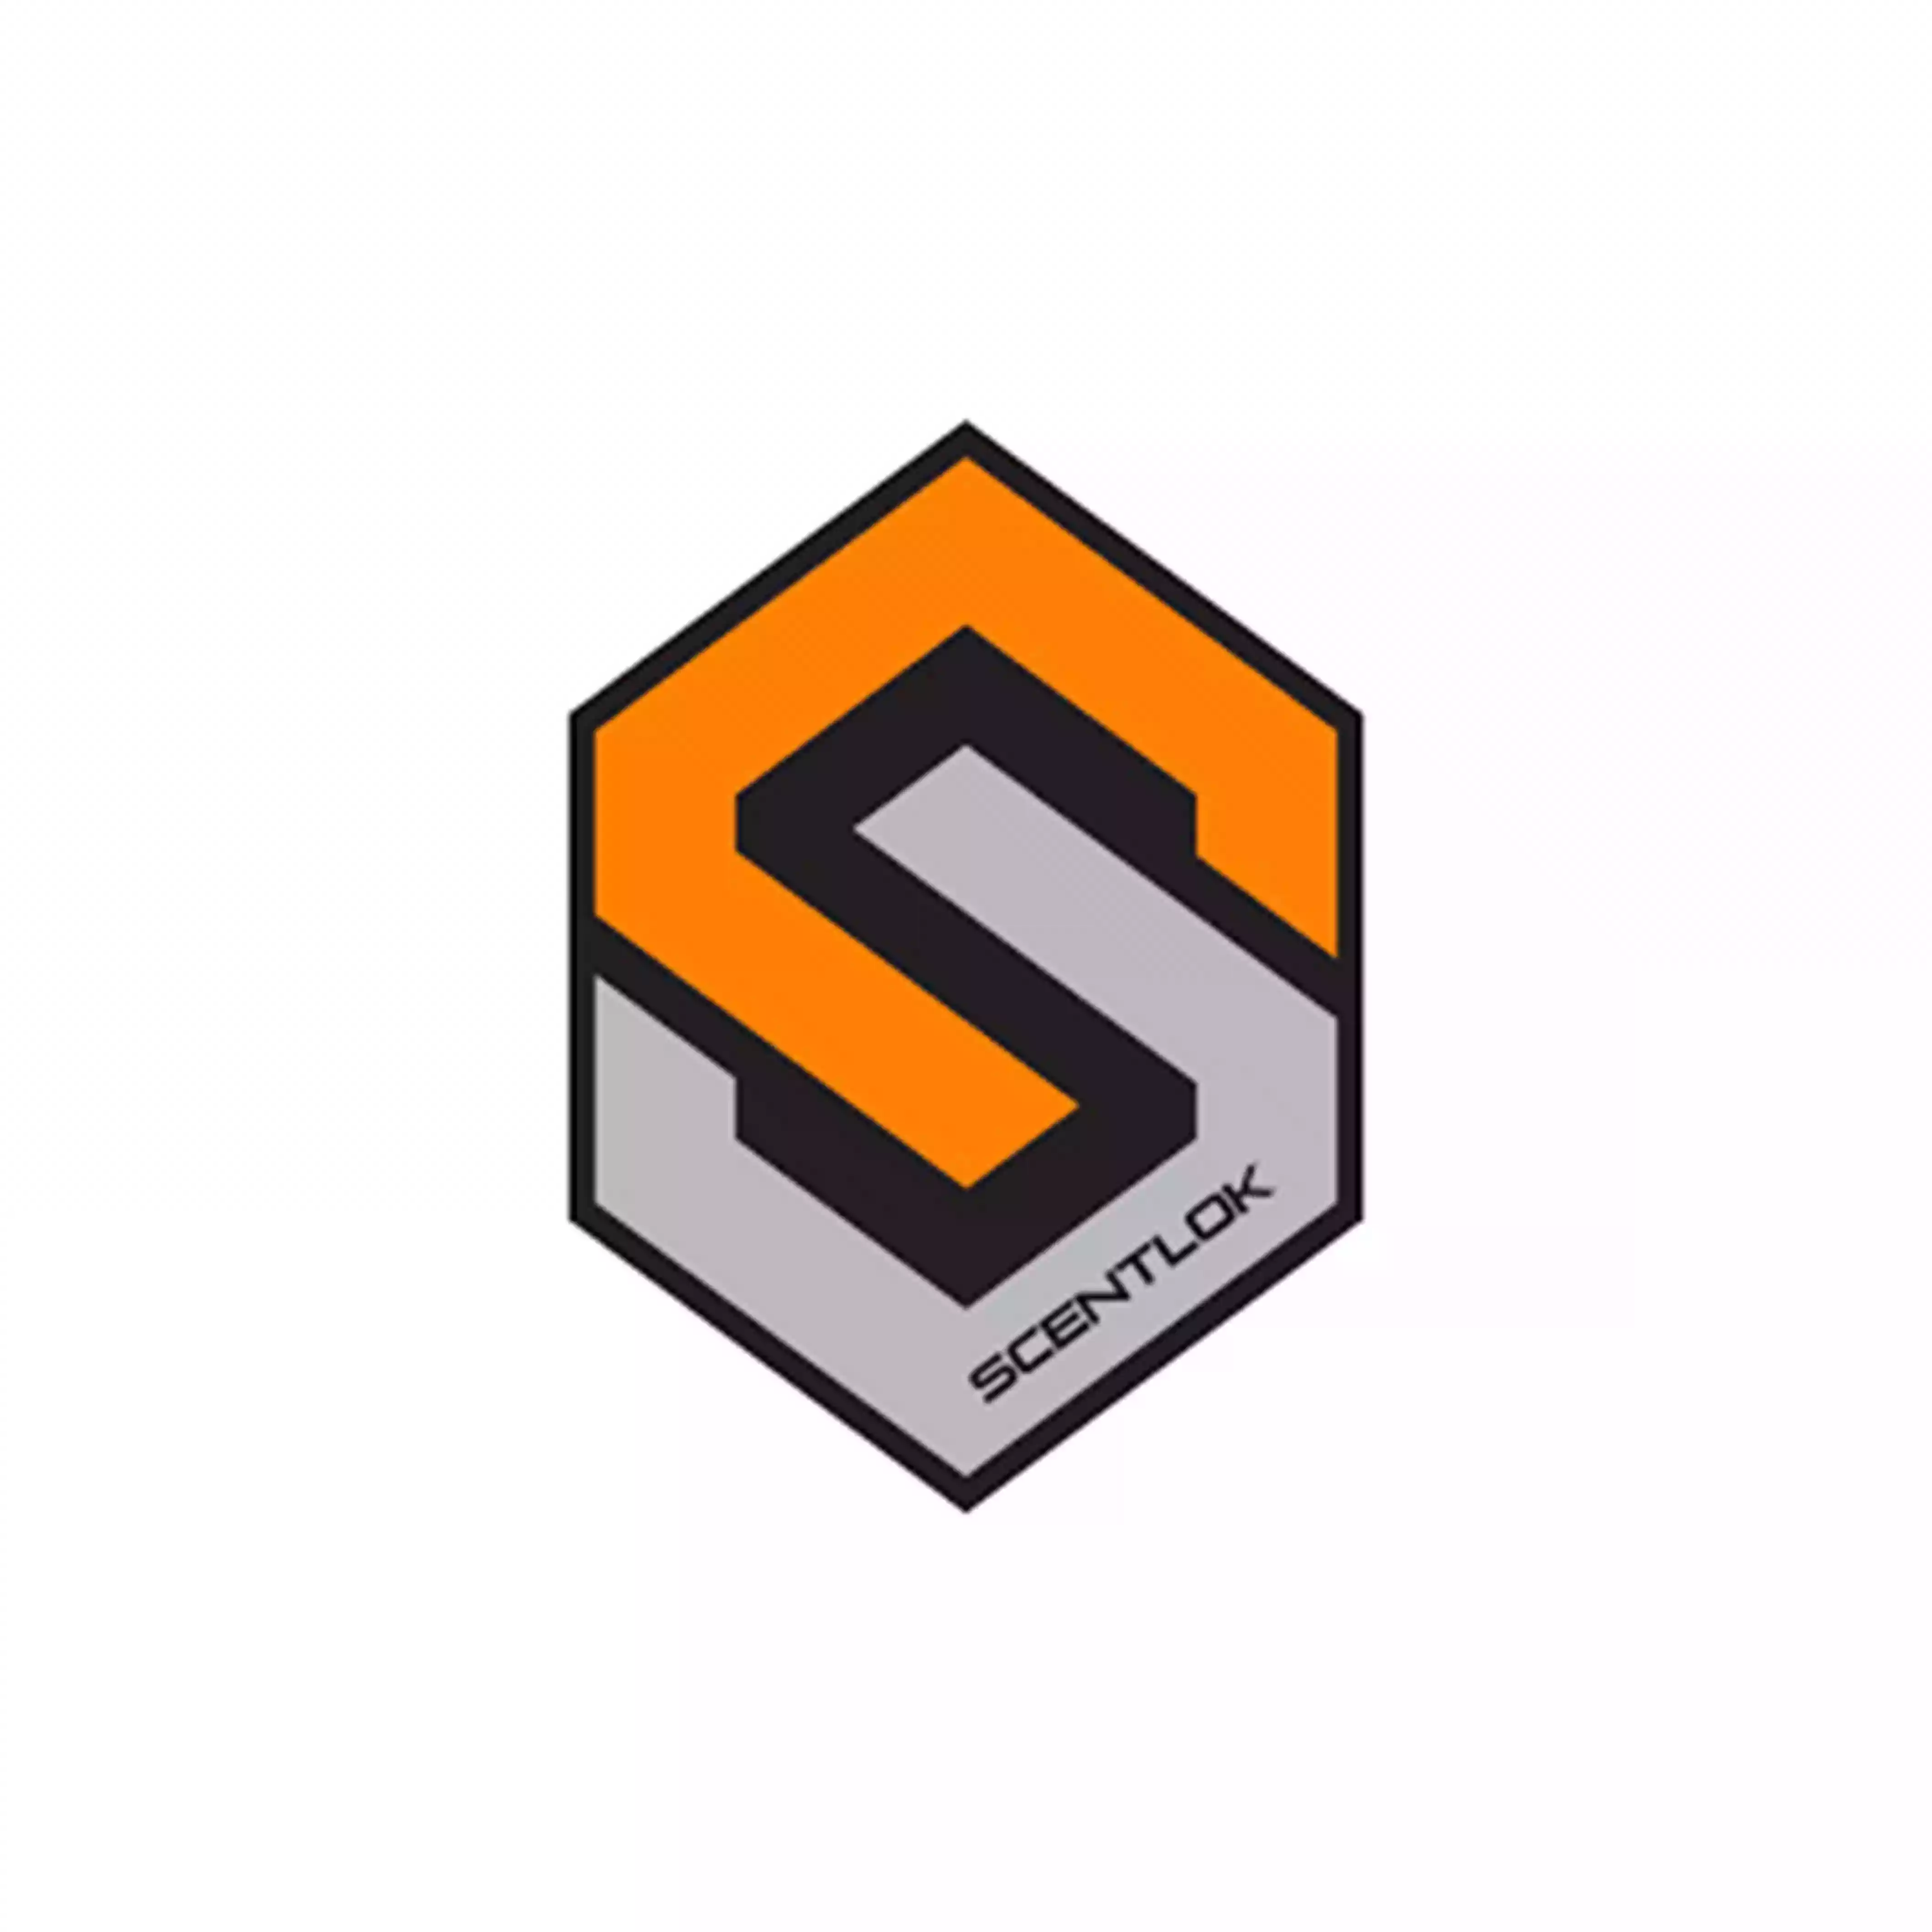 ScentLok logo